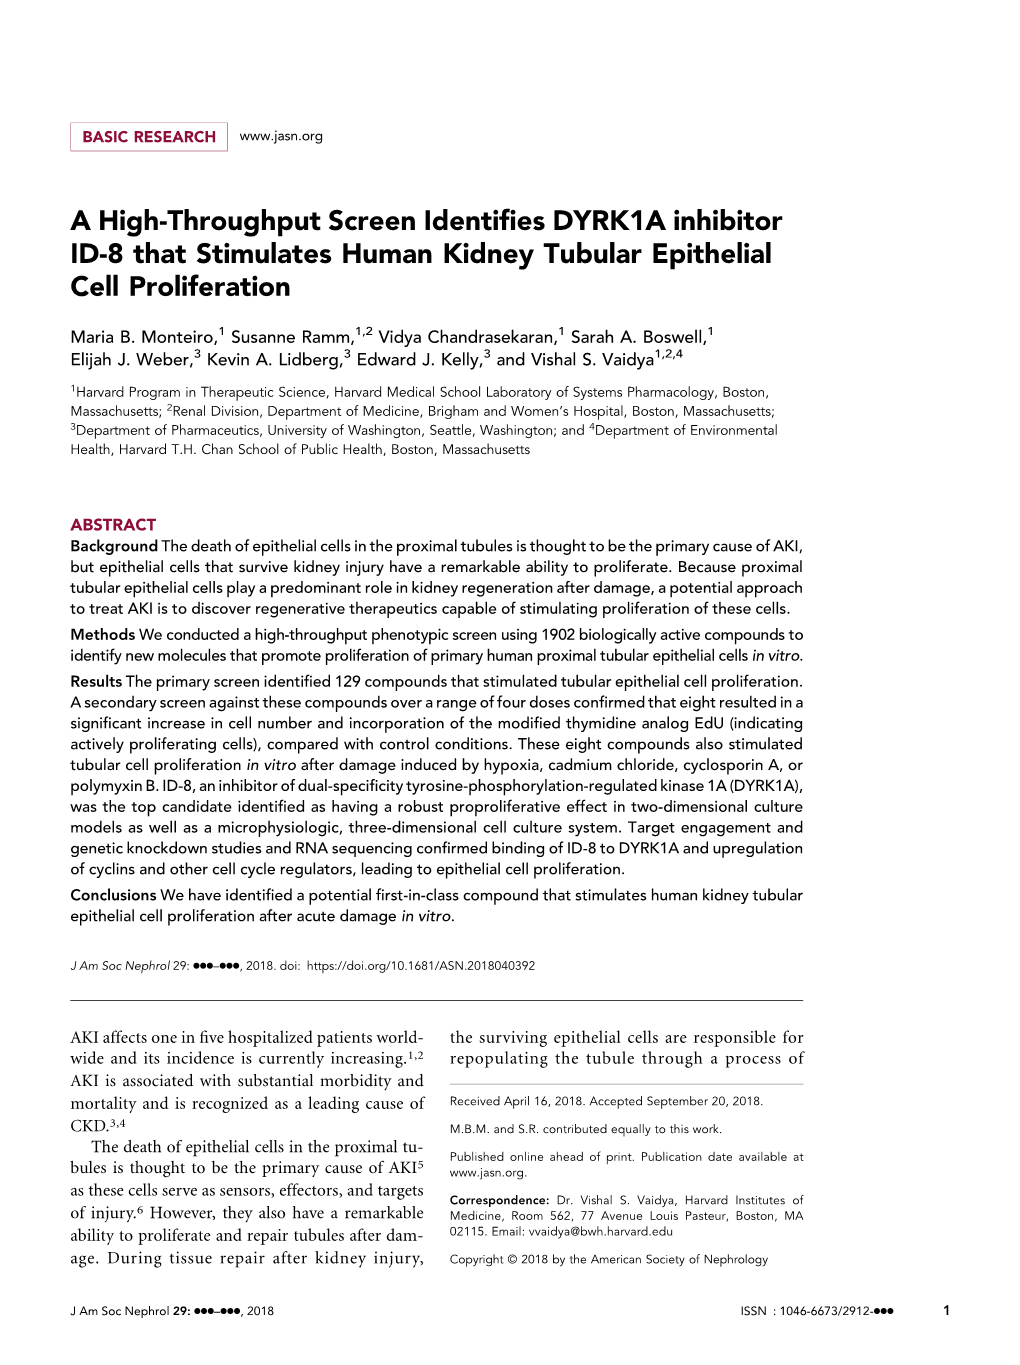 A High-Throughput Screen Identifies DYRK1A Inhibitor ID-8 That